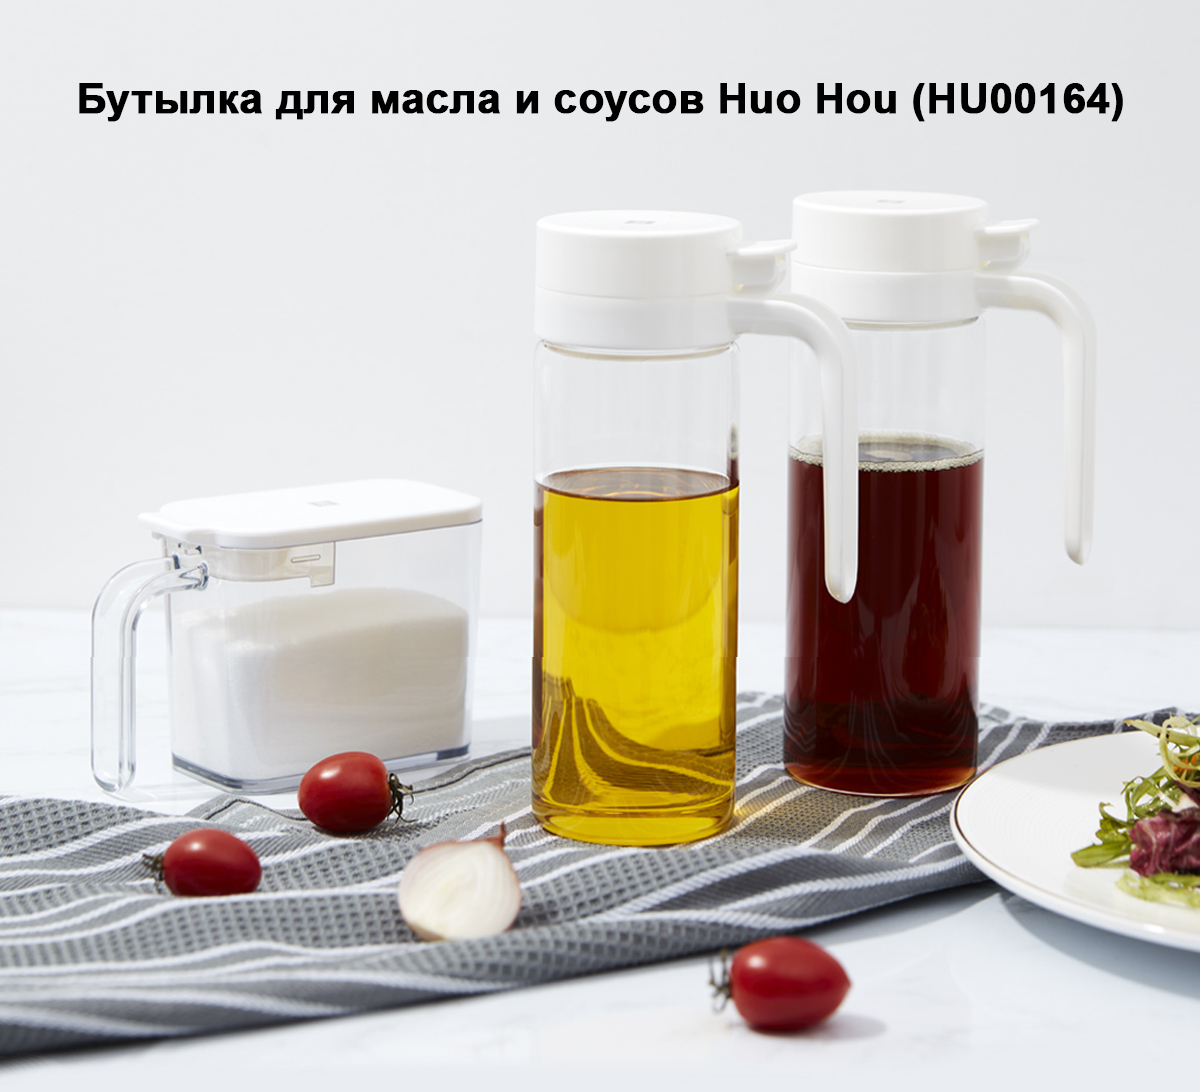 Бутылка для масла и соусов Huo Hou (HU00164)